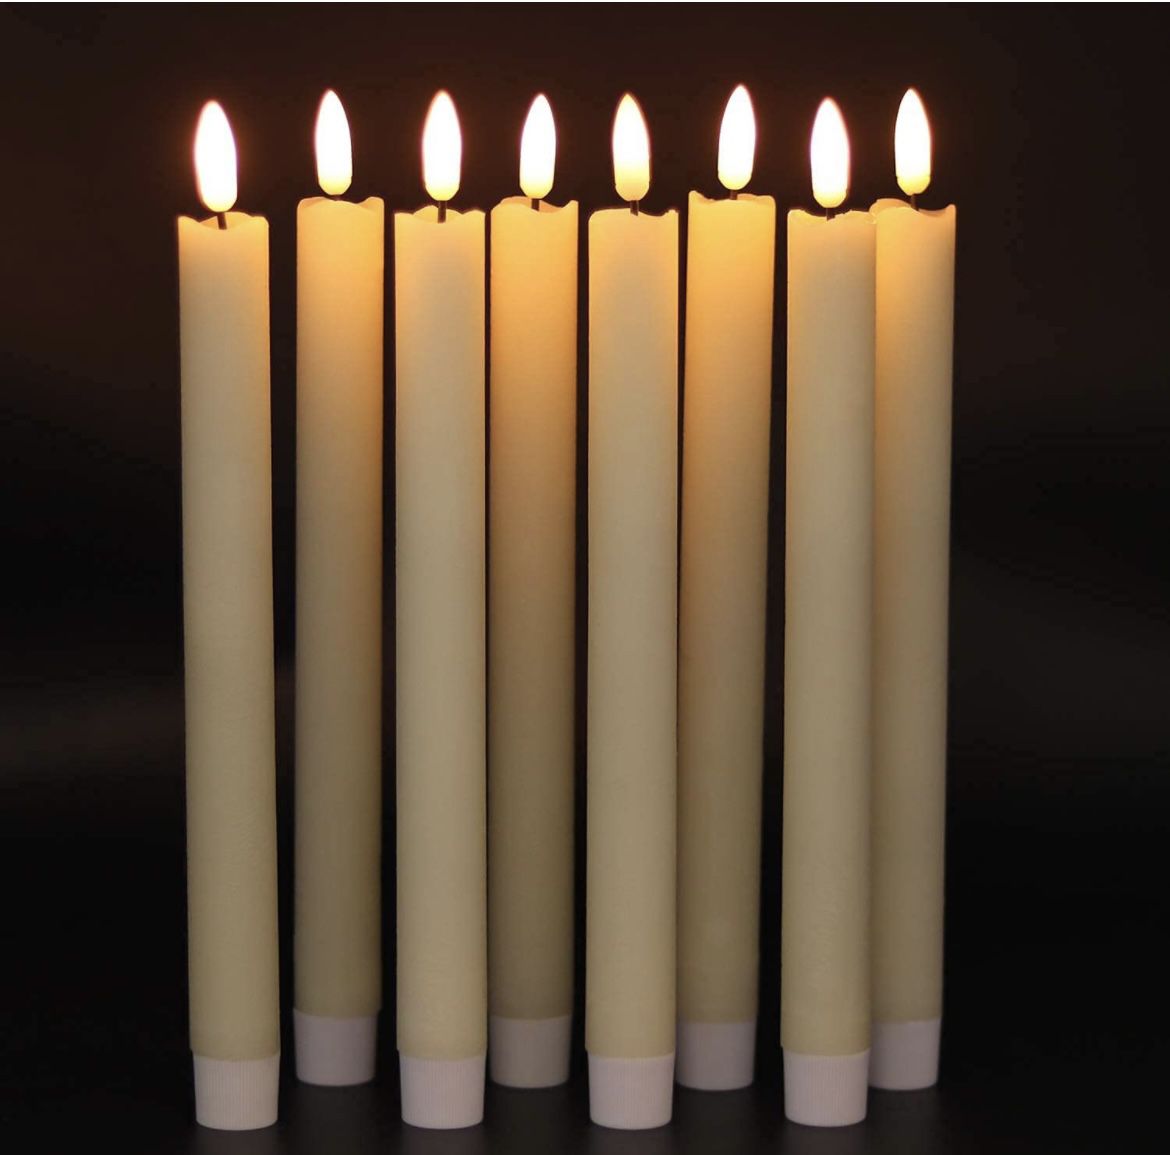 LED Candle Bundle Deal